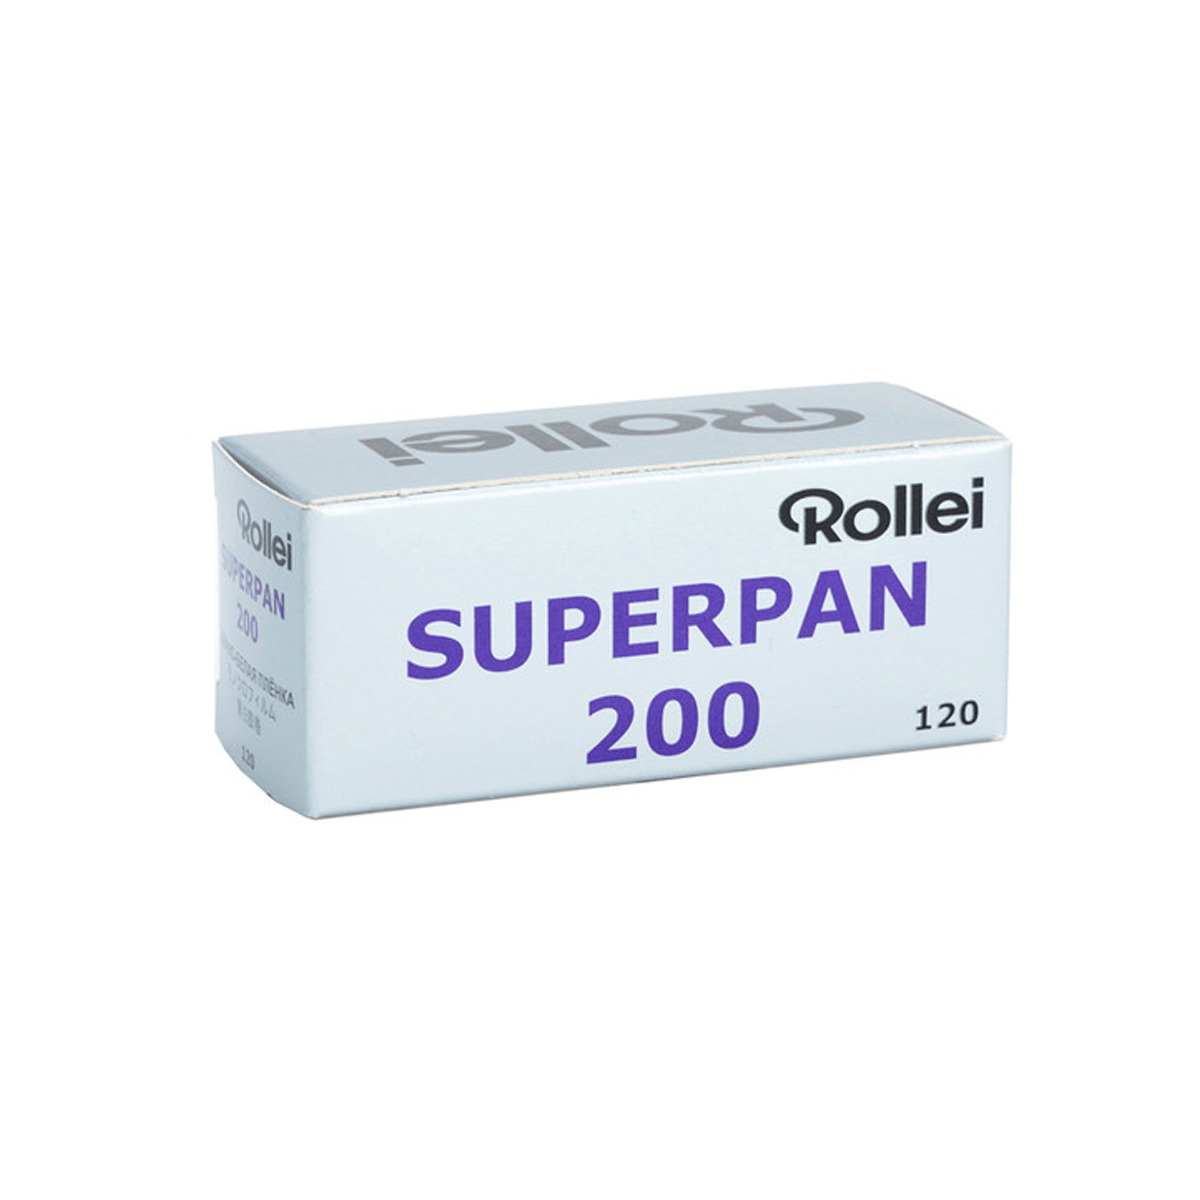 Rollei Superpan 200 Pelicula Formato Medio ByN - GG GAMER STORE